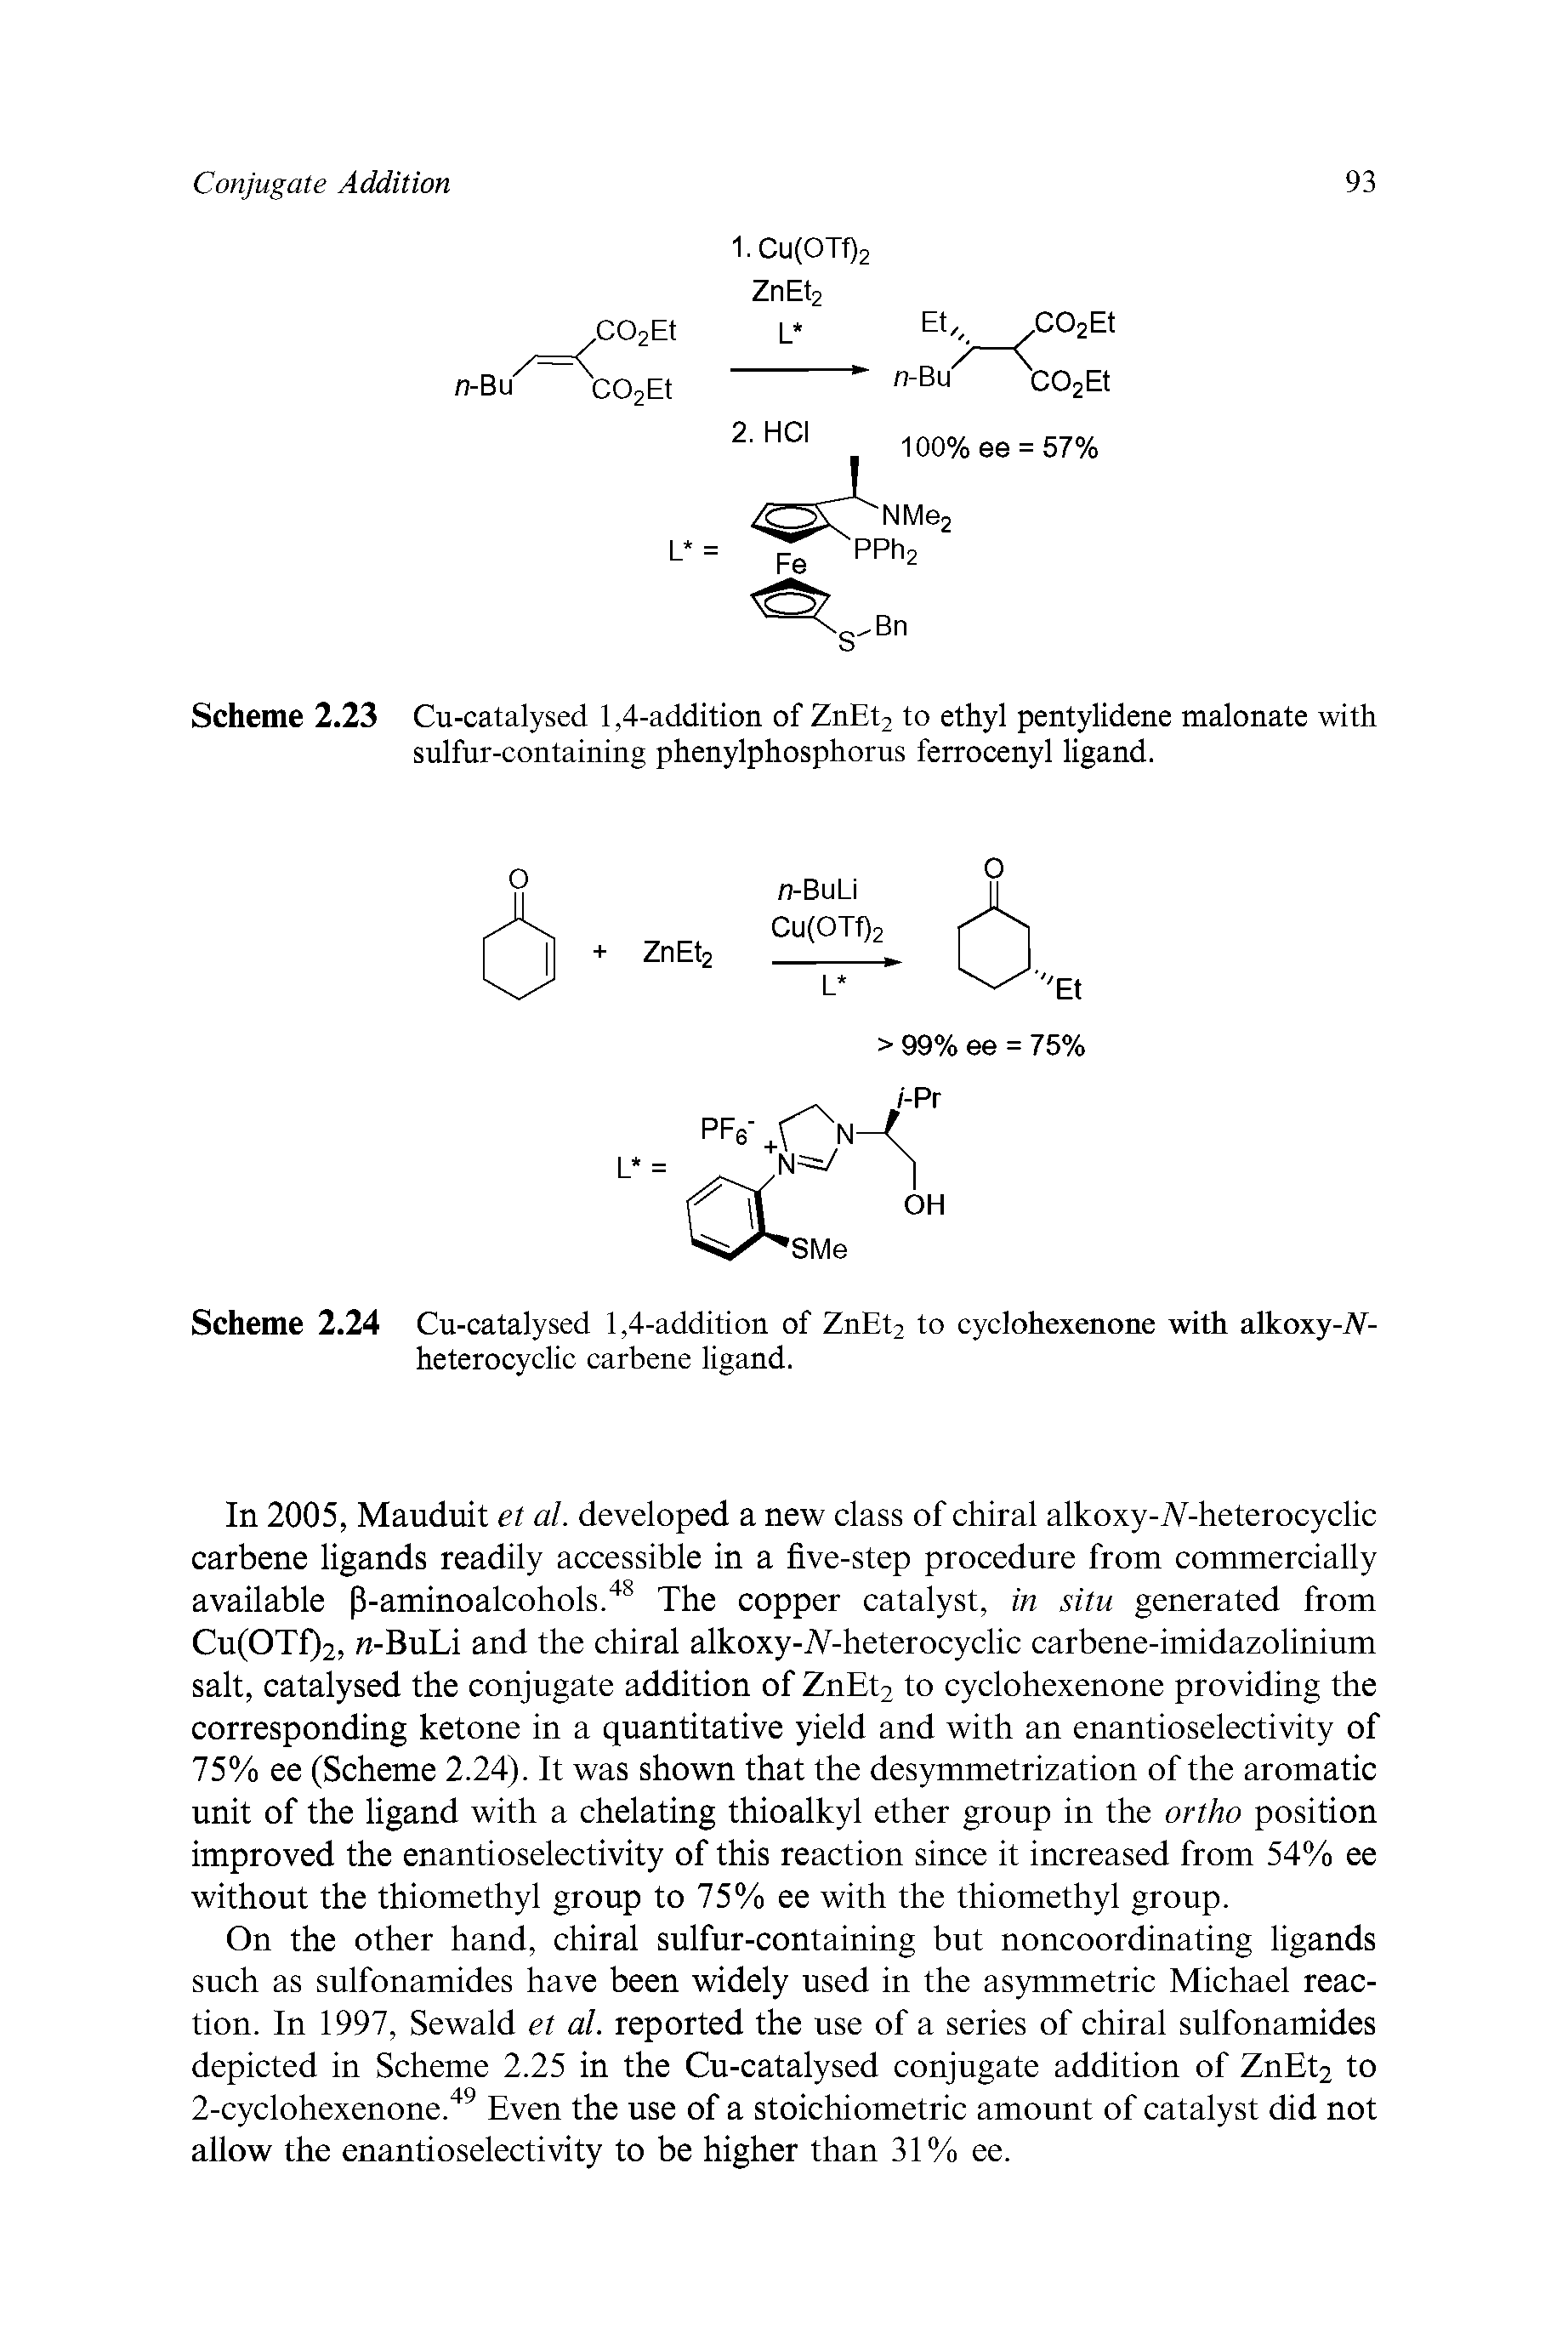 Scheme 2.24 Cu-catalysed 1,4-addition of ZnEt2 to cyclohexenone with alkoxy-7V-heterocyclic carbene ligand.